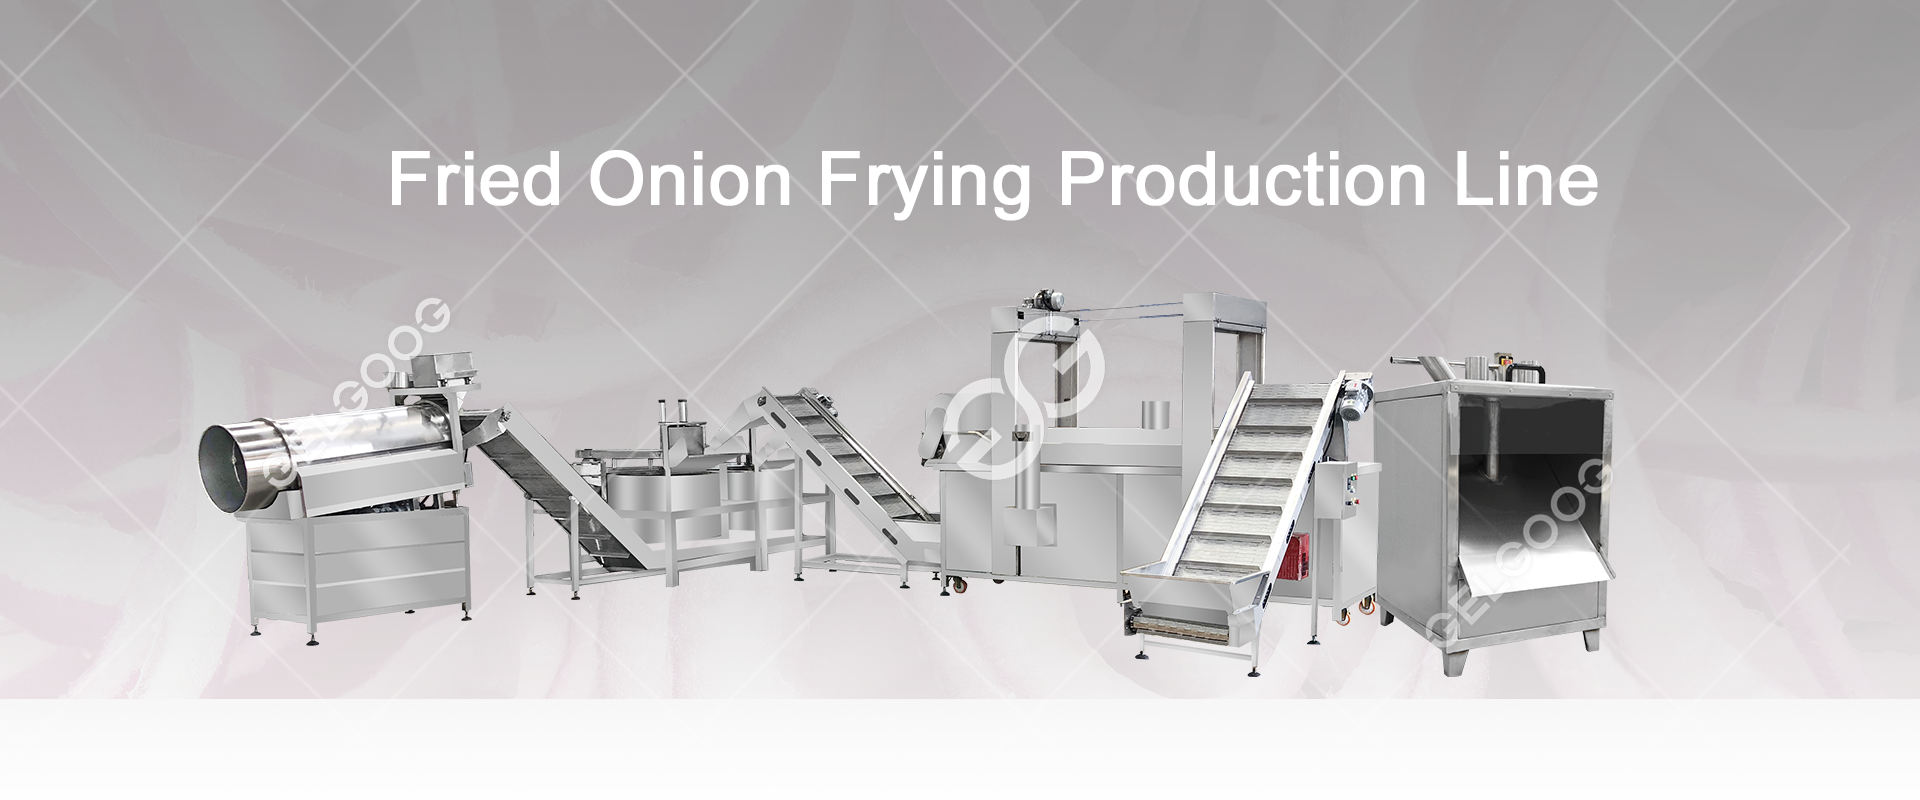 onion frying line